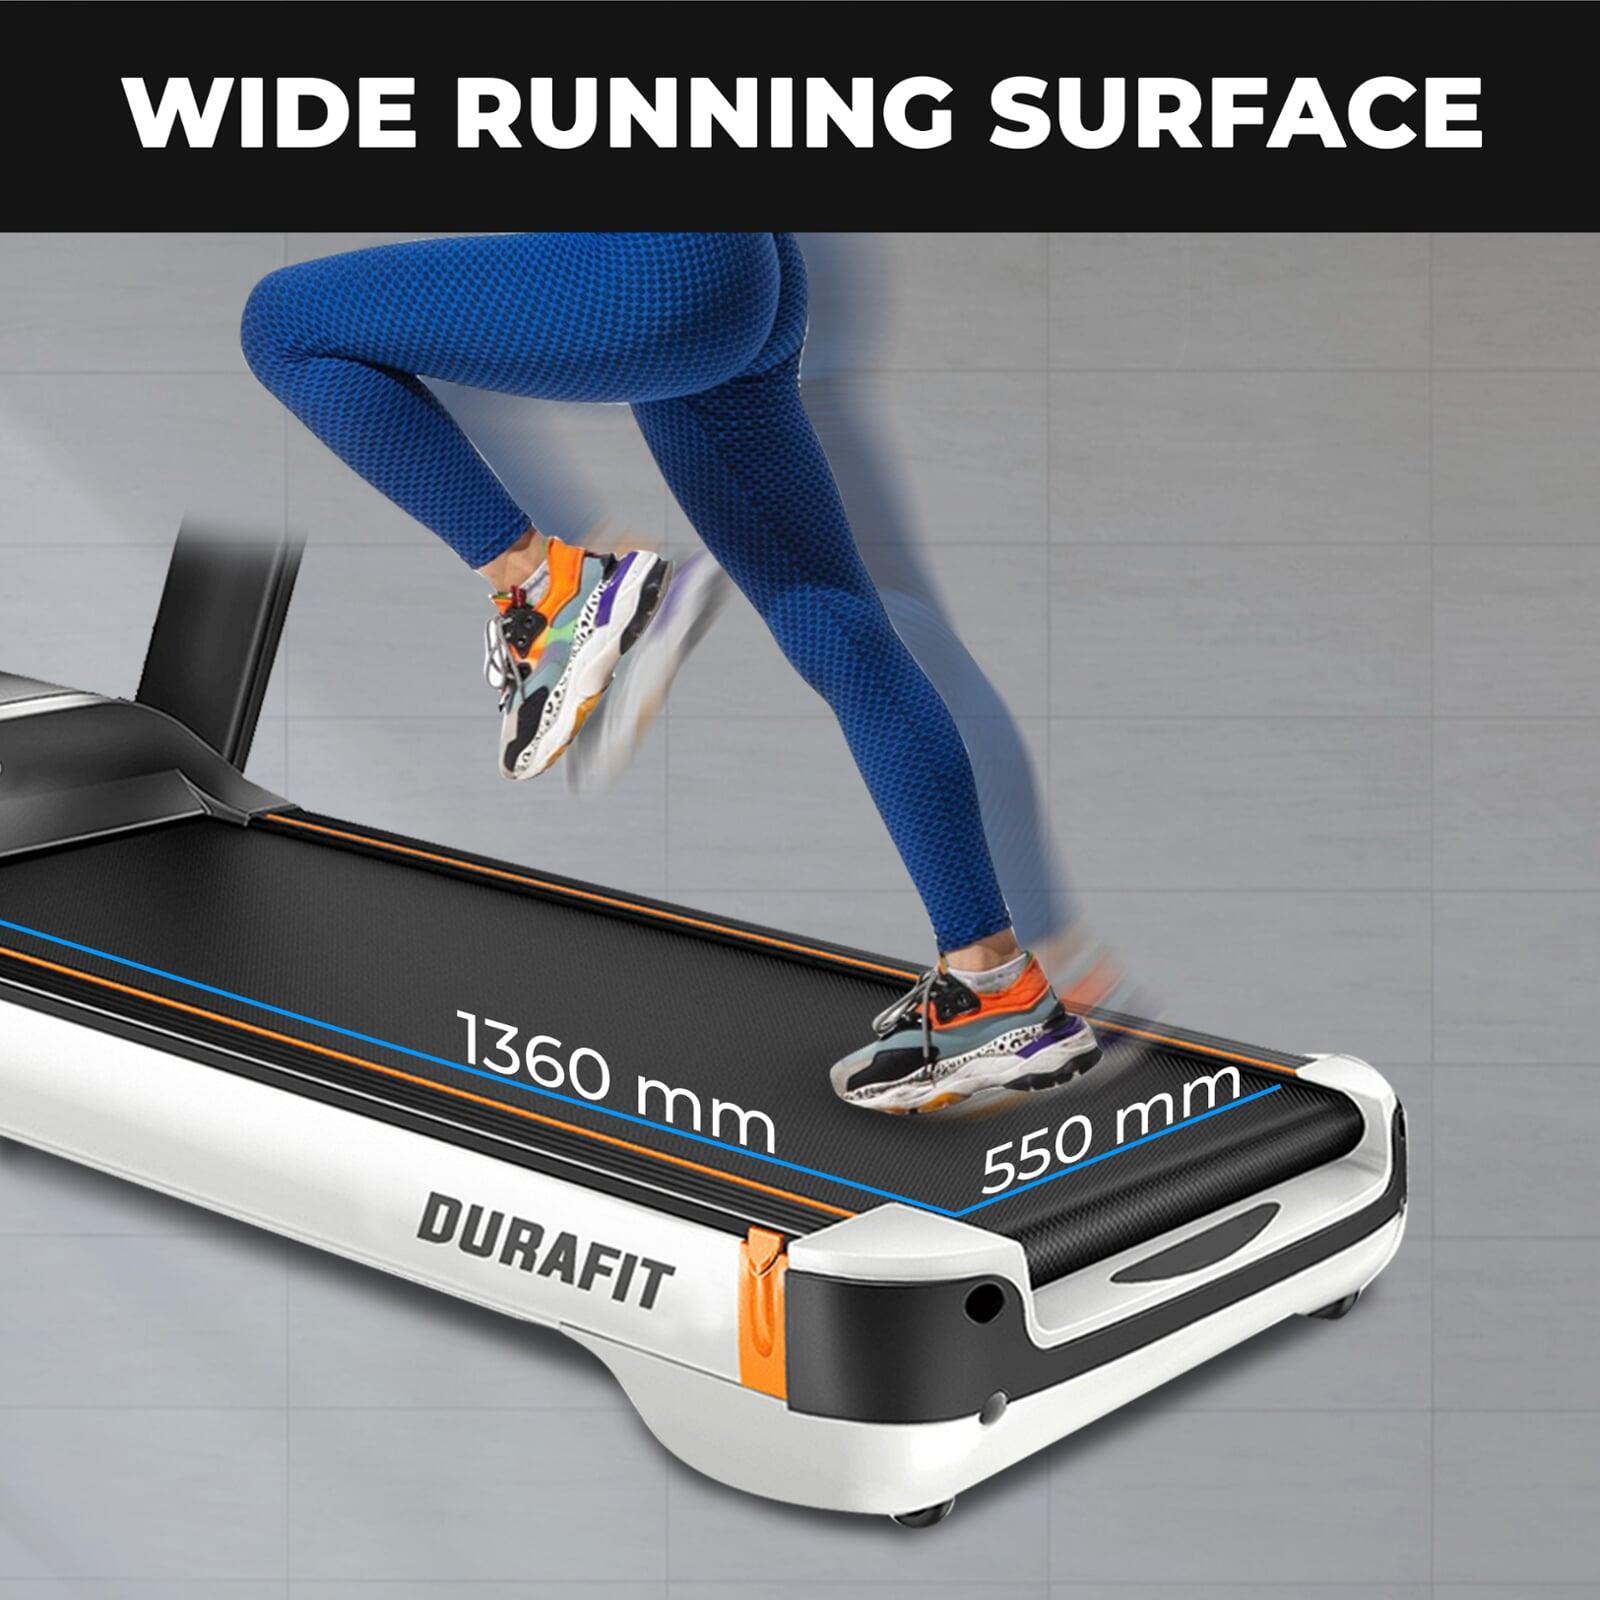 Durafit Focus Multifunction Treadmill